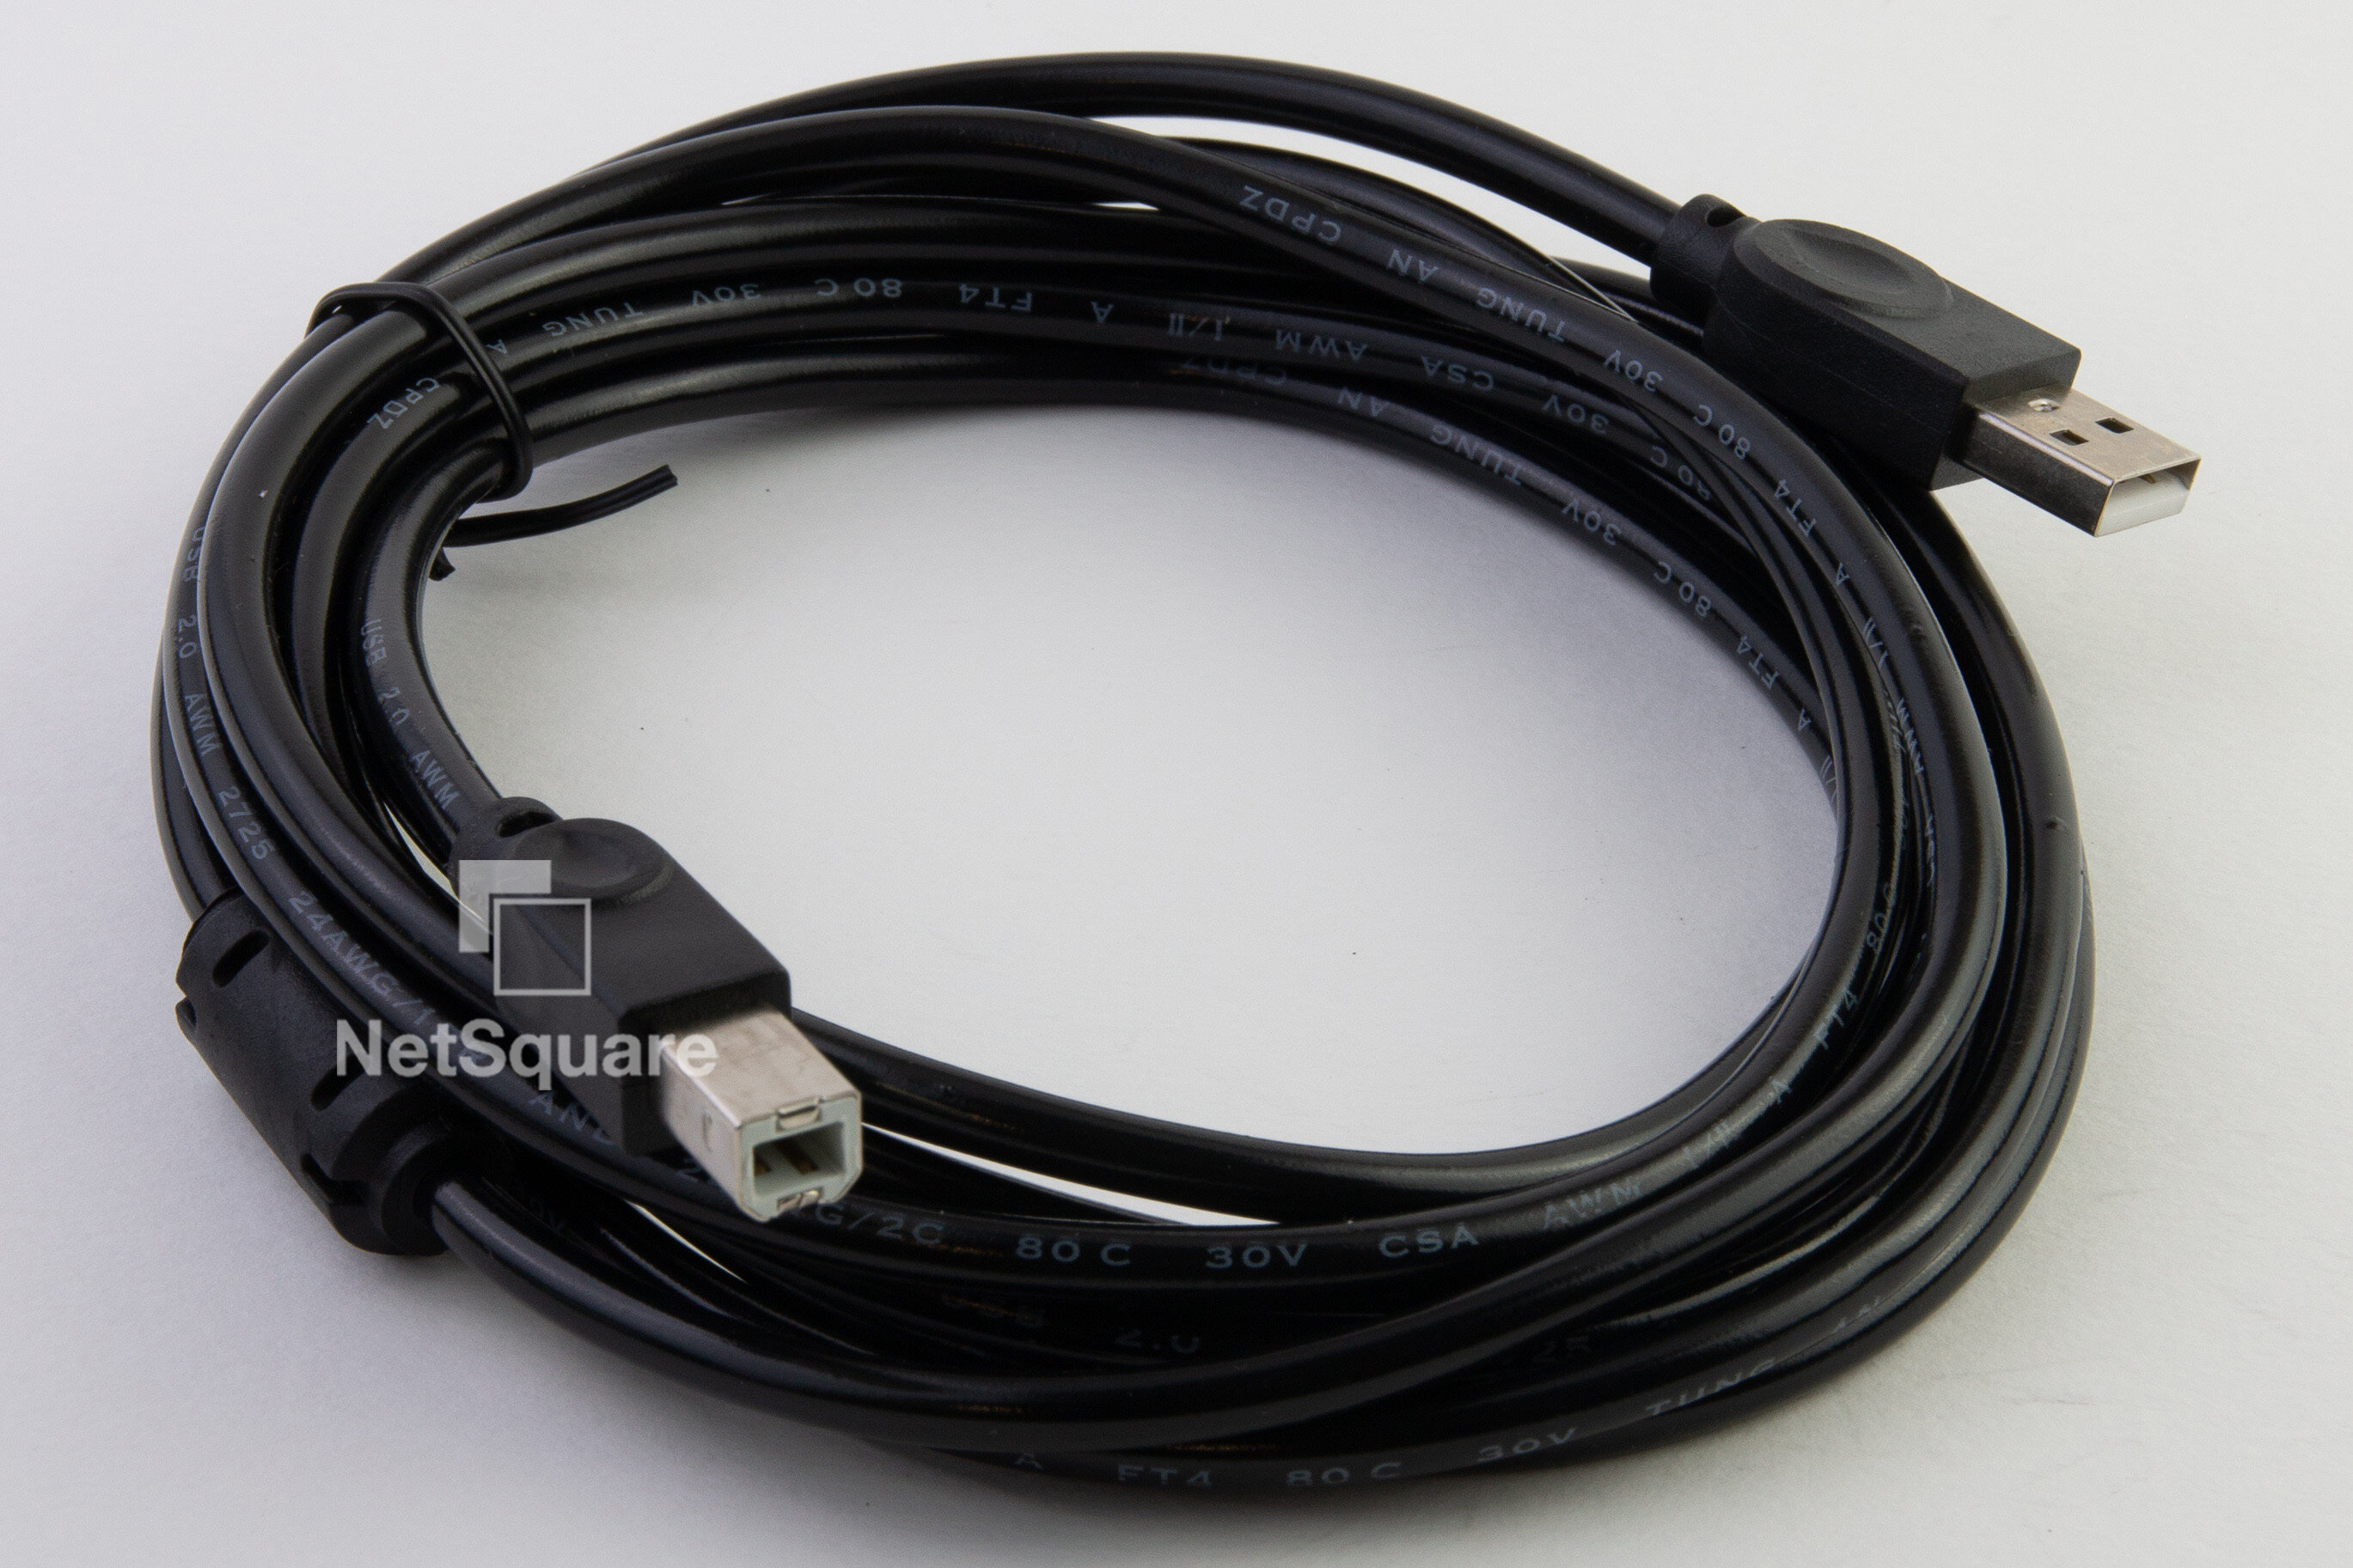 USB Type A to USB Type B Cable สำหรับ Printer, Arduino ยาว 1.5m/3m/5m Black สาย